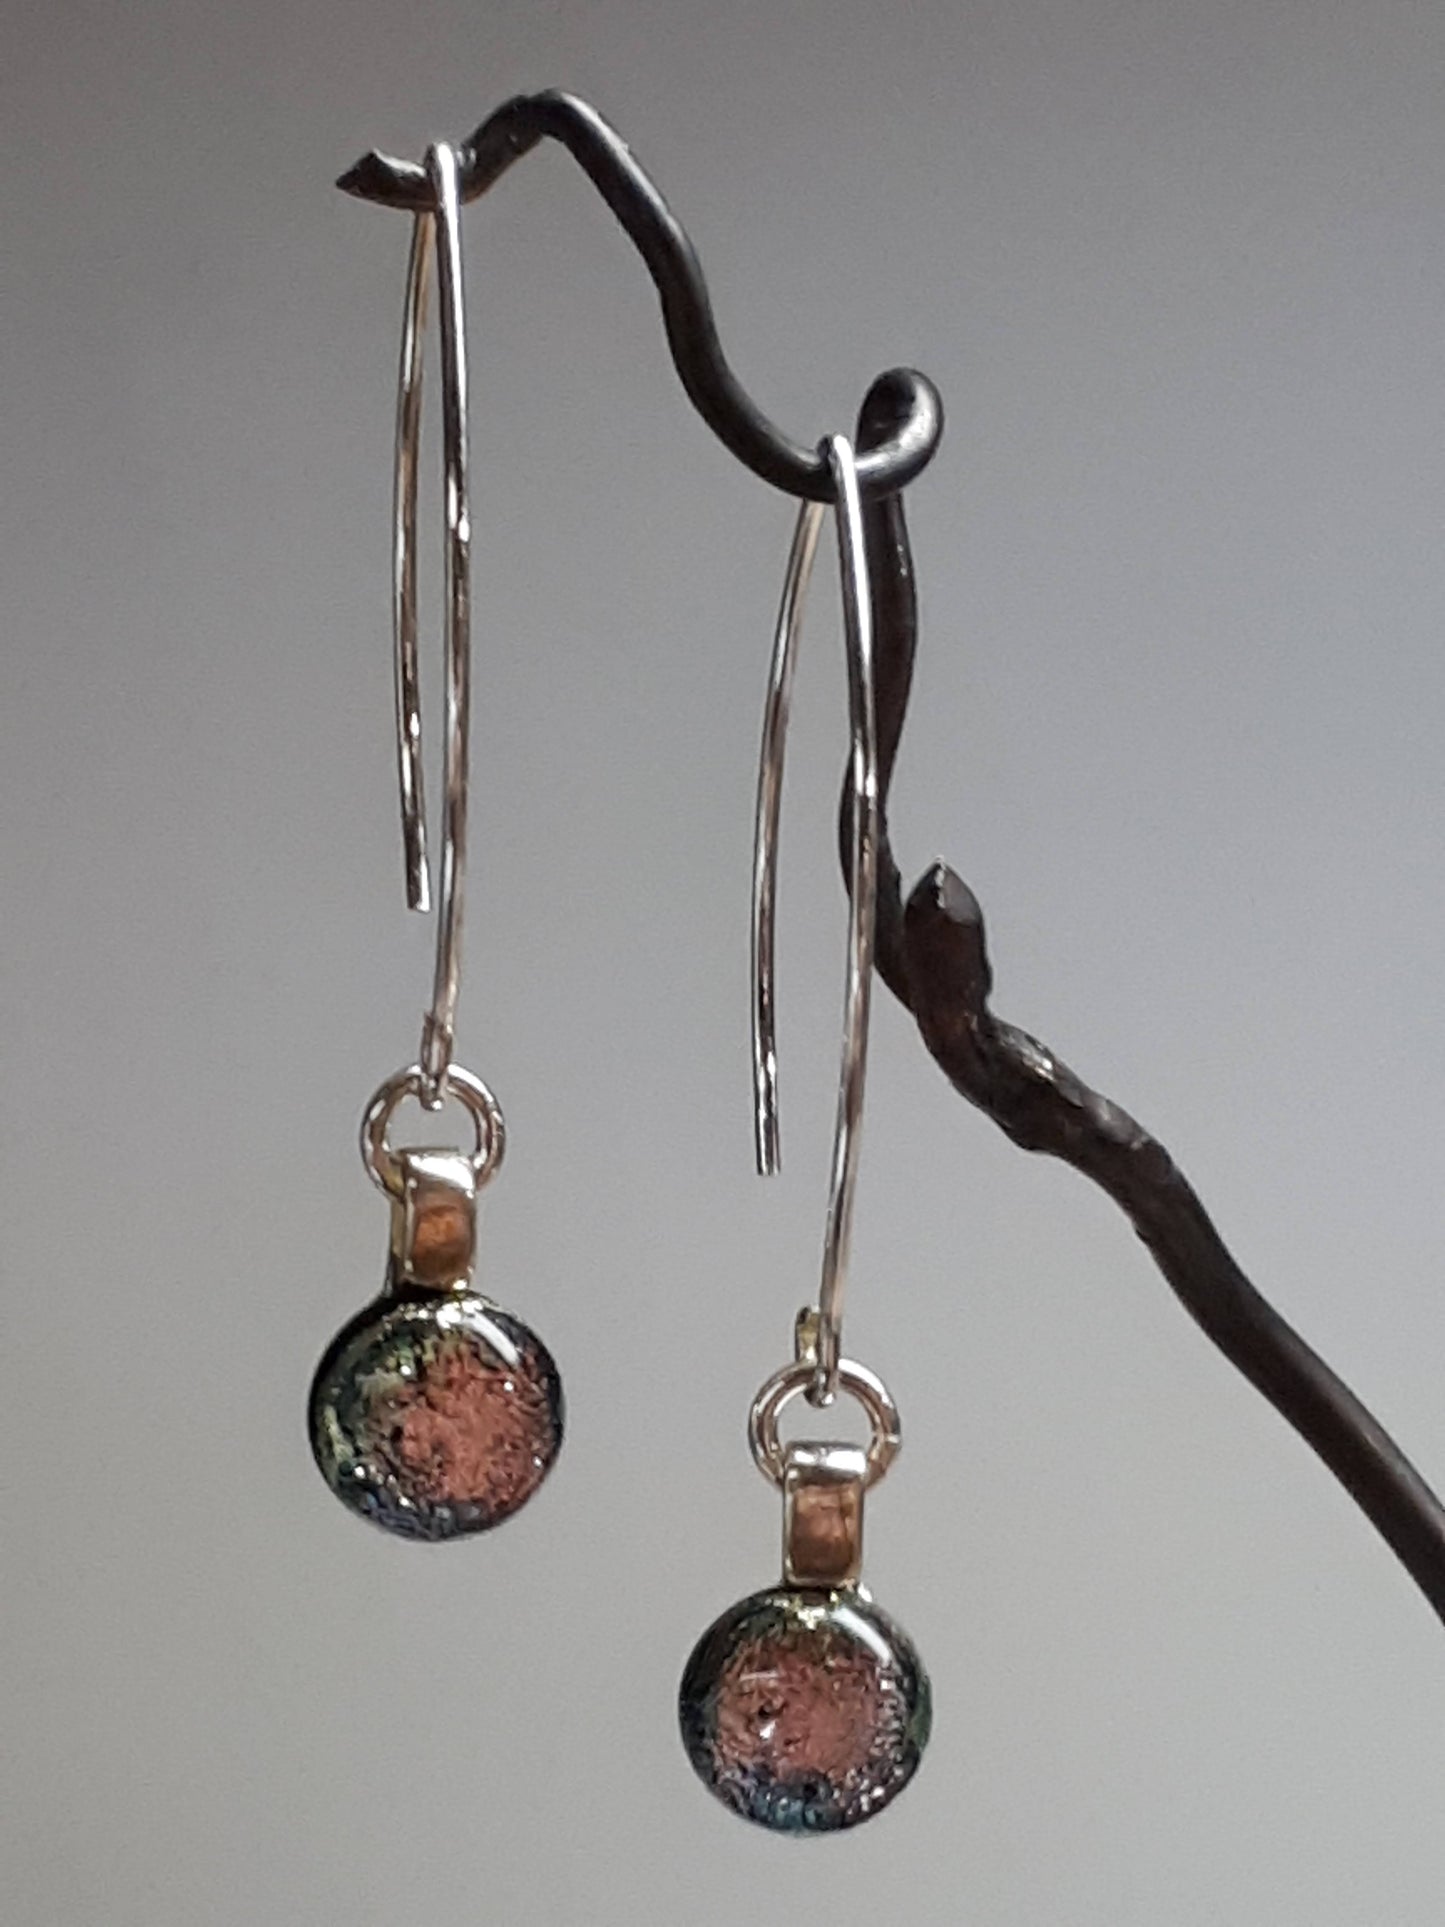 Beautiful handmade glass jewelry - Hanscomb Glass lightweight earrings